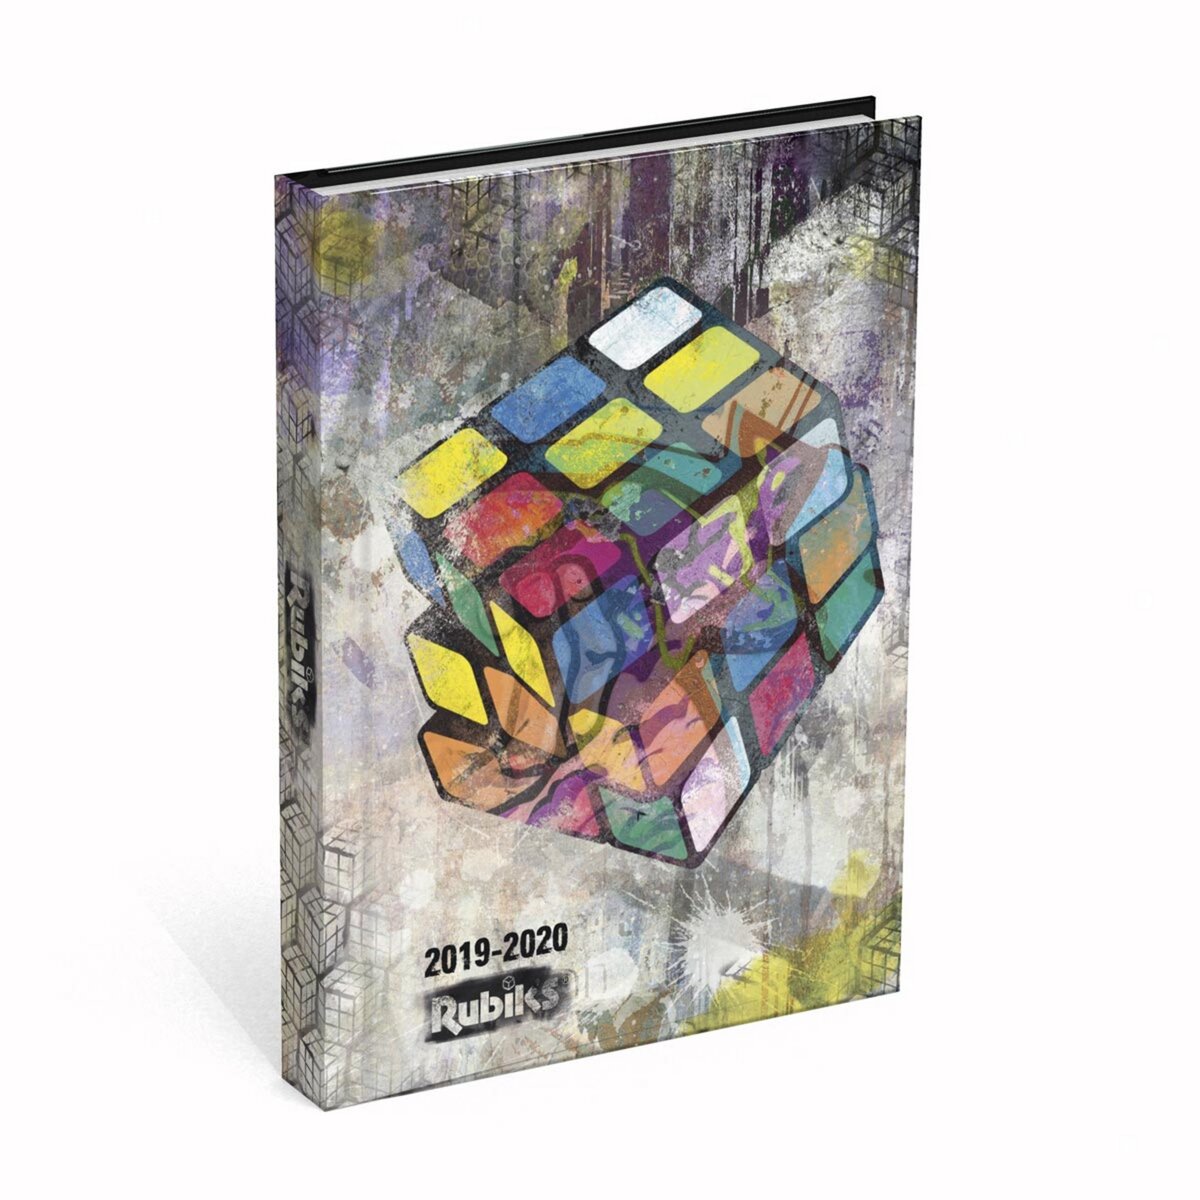  Agenda scolaire 12,5x17,7cm marron Rubik's 2019-2020